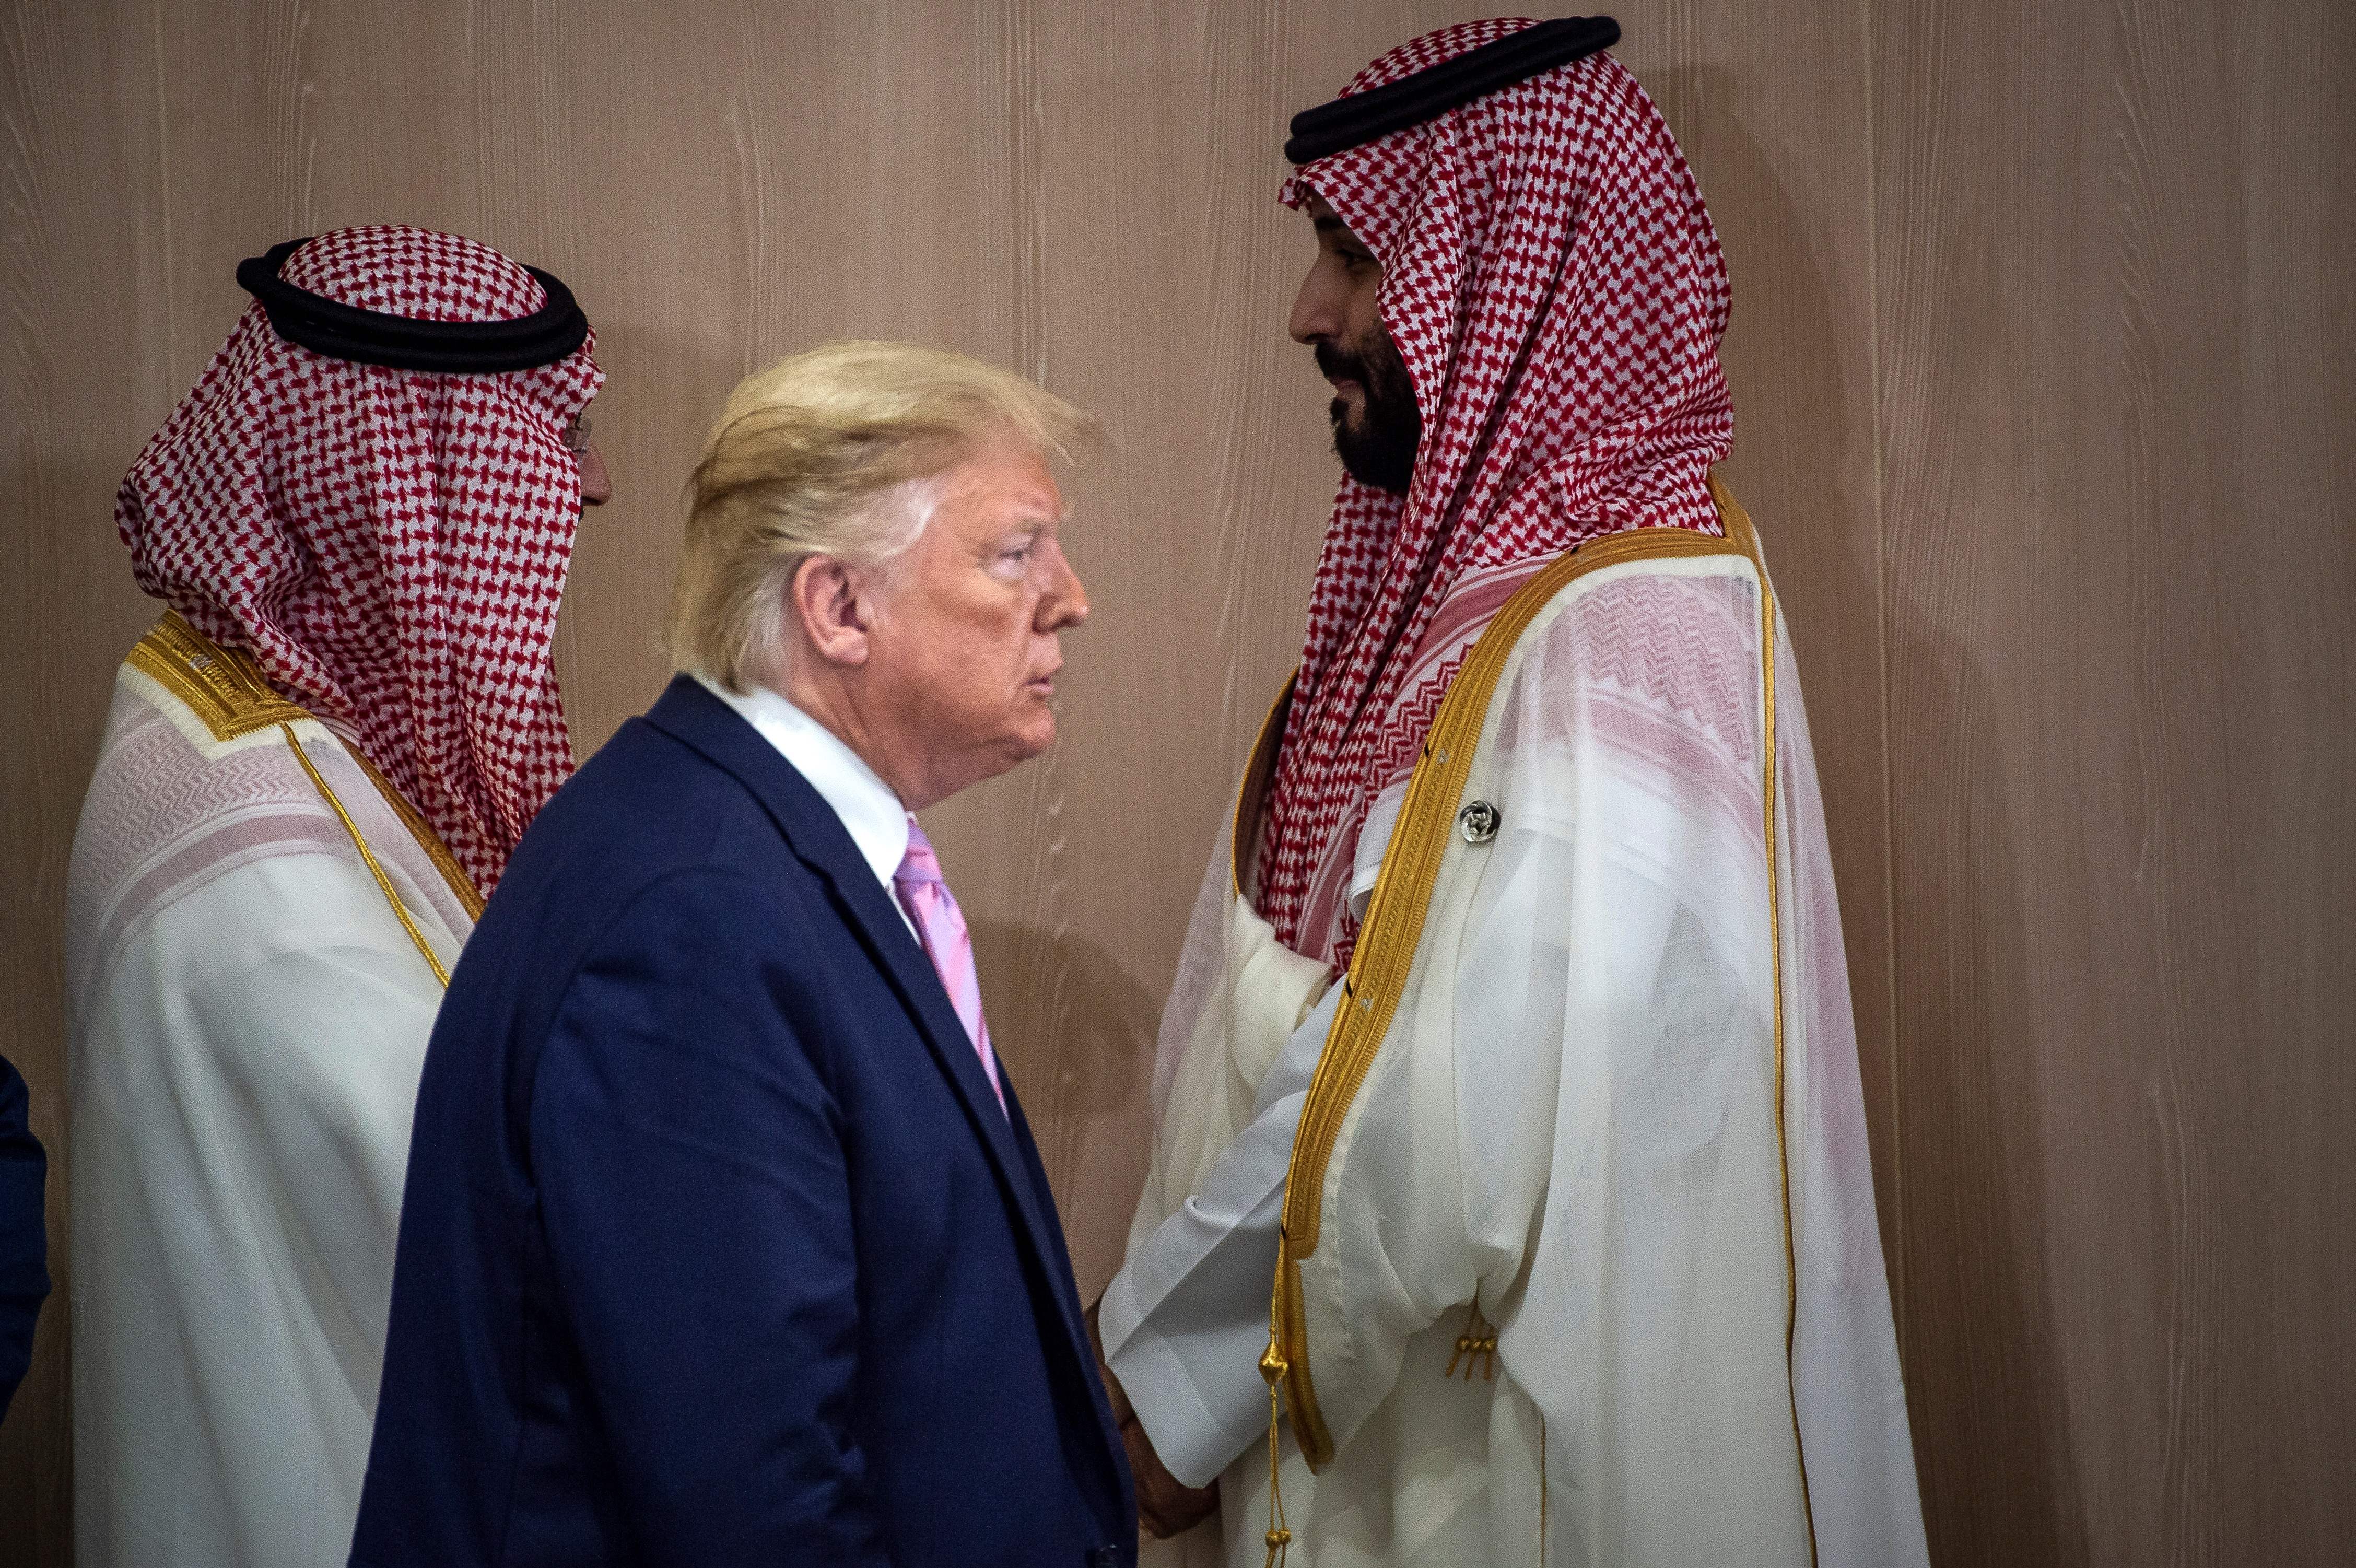 US President Trump and Saudi Arabia's Crown Prince Mohammed Bin Salman arrive for a meeting on 